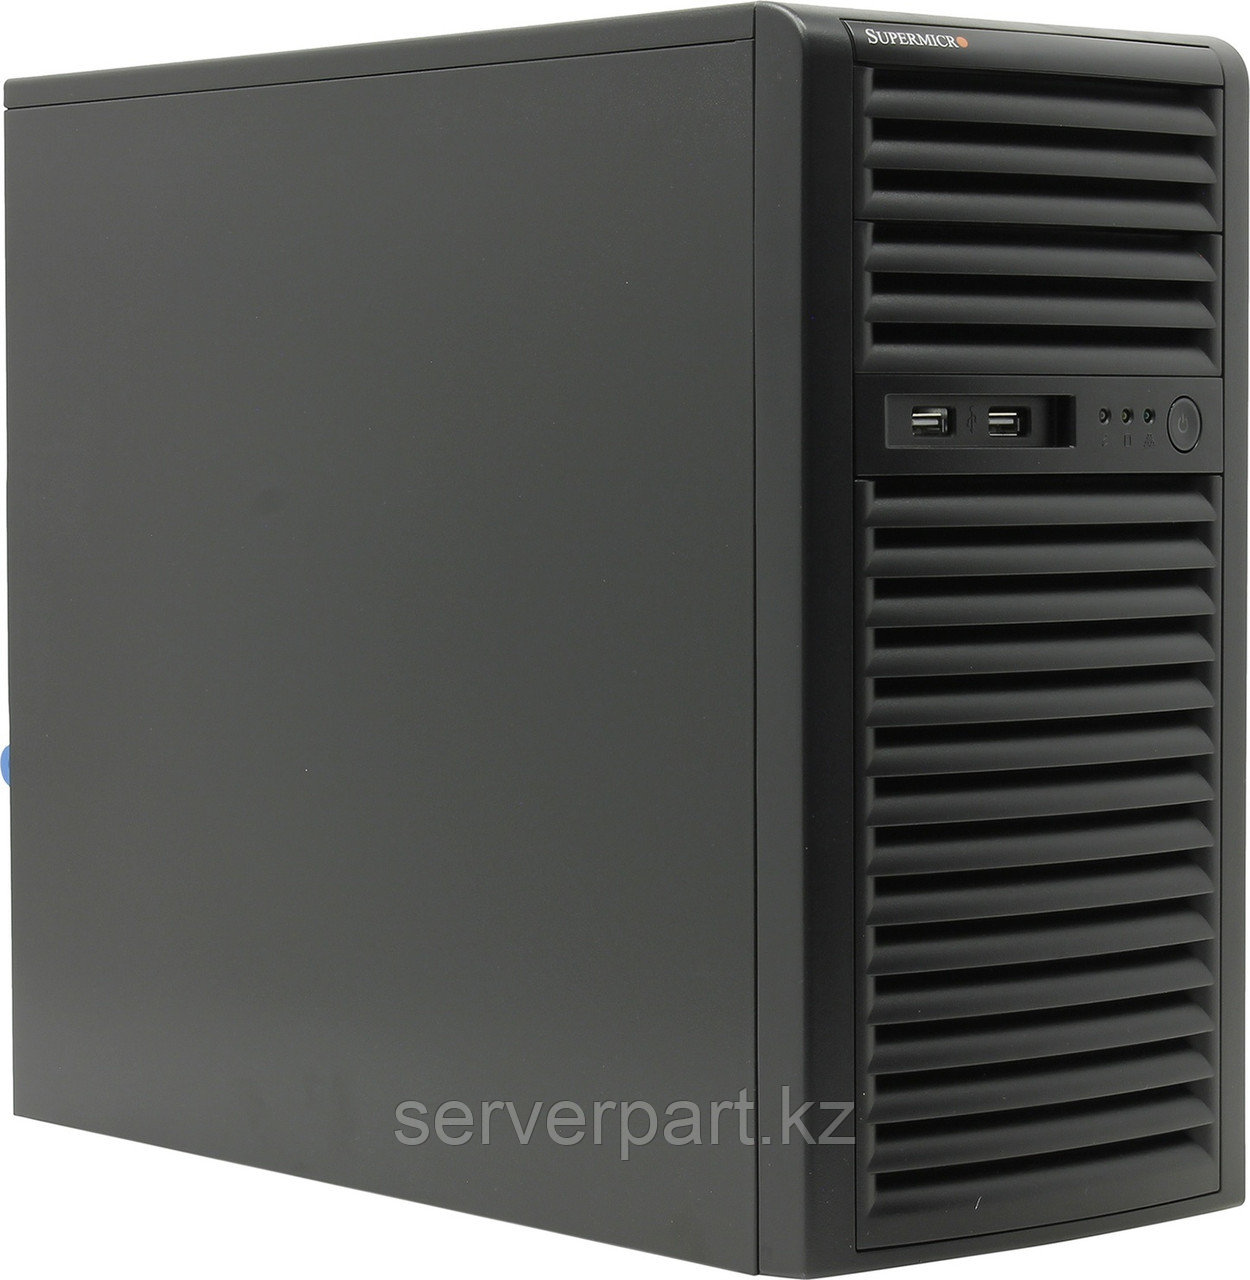 Сервер Supermicro SYS-5039D Tower/4-core intel xeon E3-1220v6 3GHz/48GB UDIMM nECC/1x480GB SSD MU Hyb, фото 1